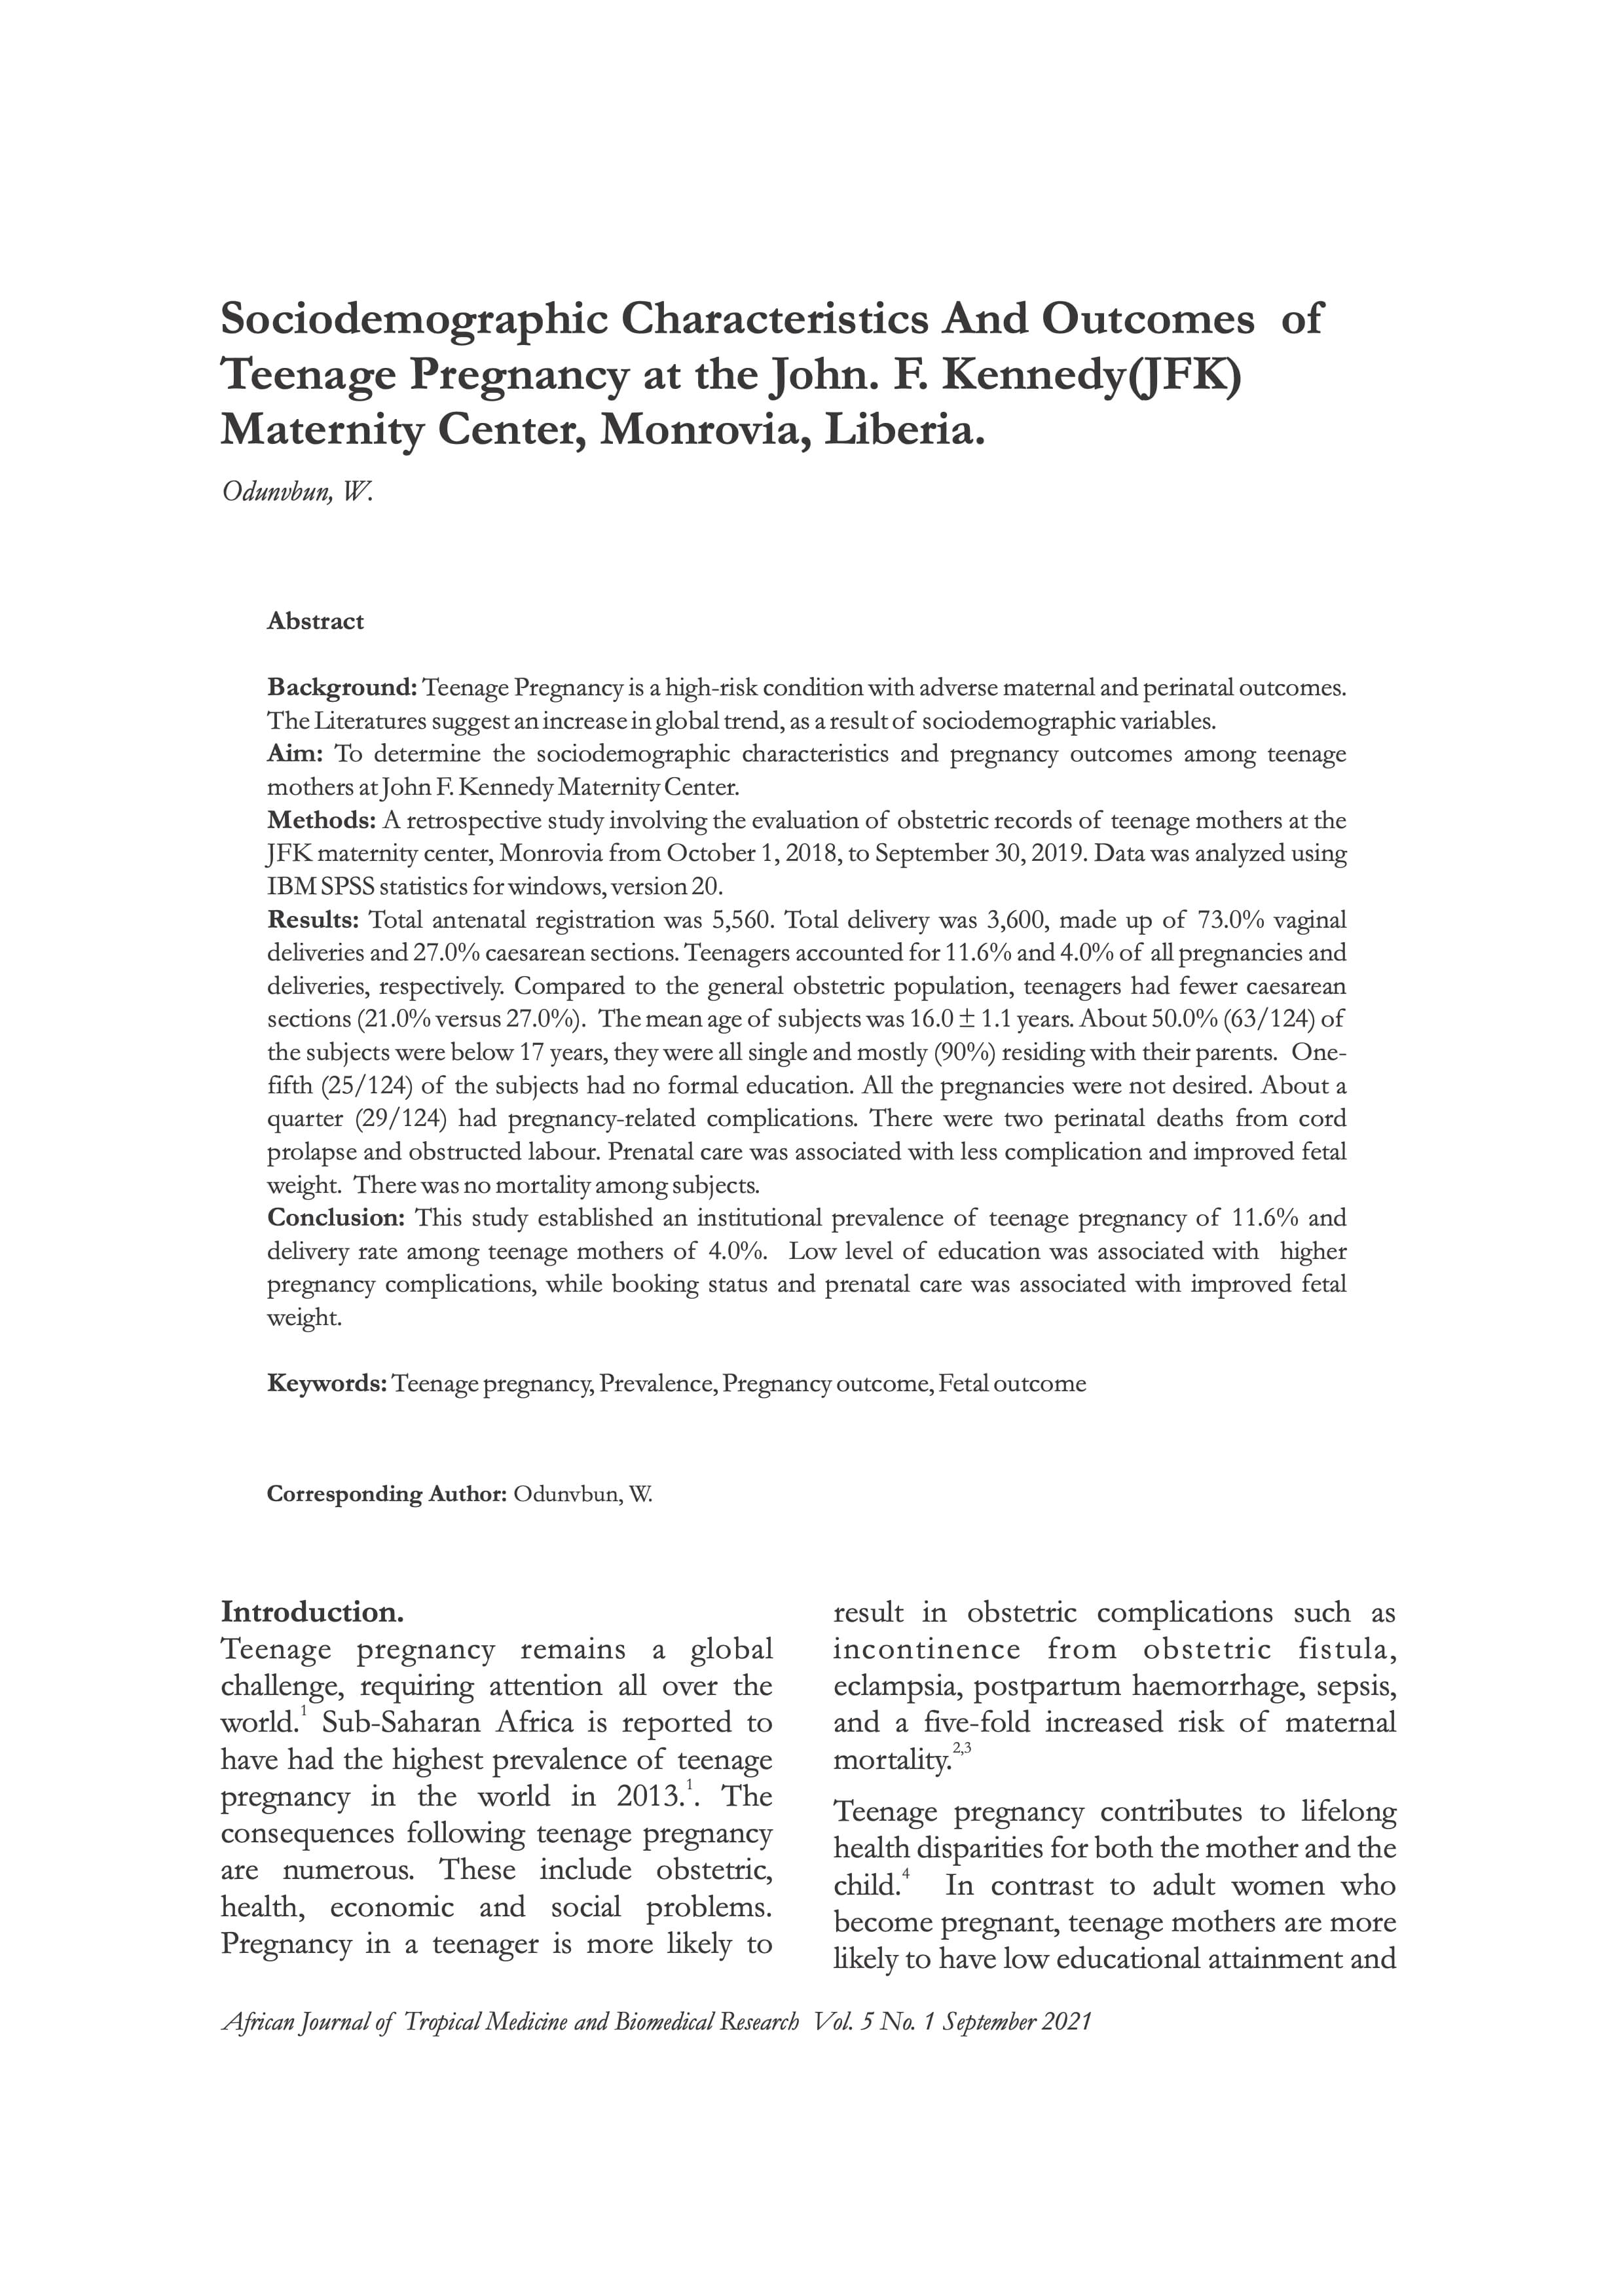 Sociodemographic Characteristics And Outcomes of Teenage Pregnancy at the John. F. Kennedy (JFK) Maternity Center, Monrovia, Liberia